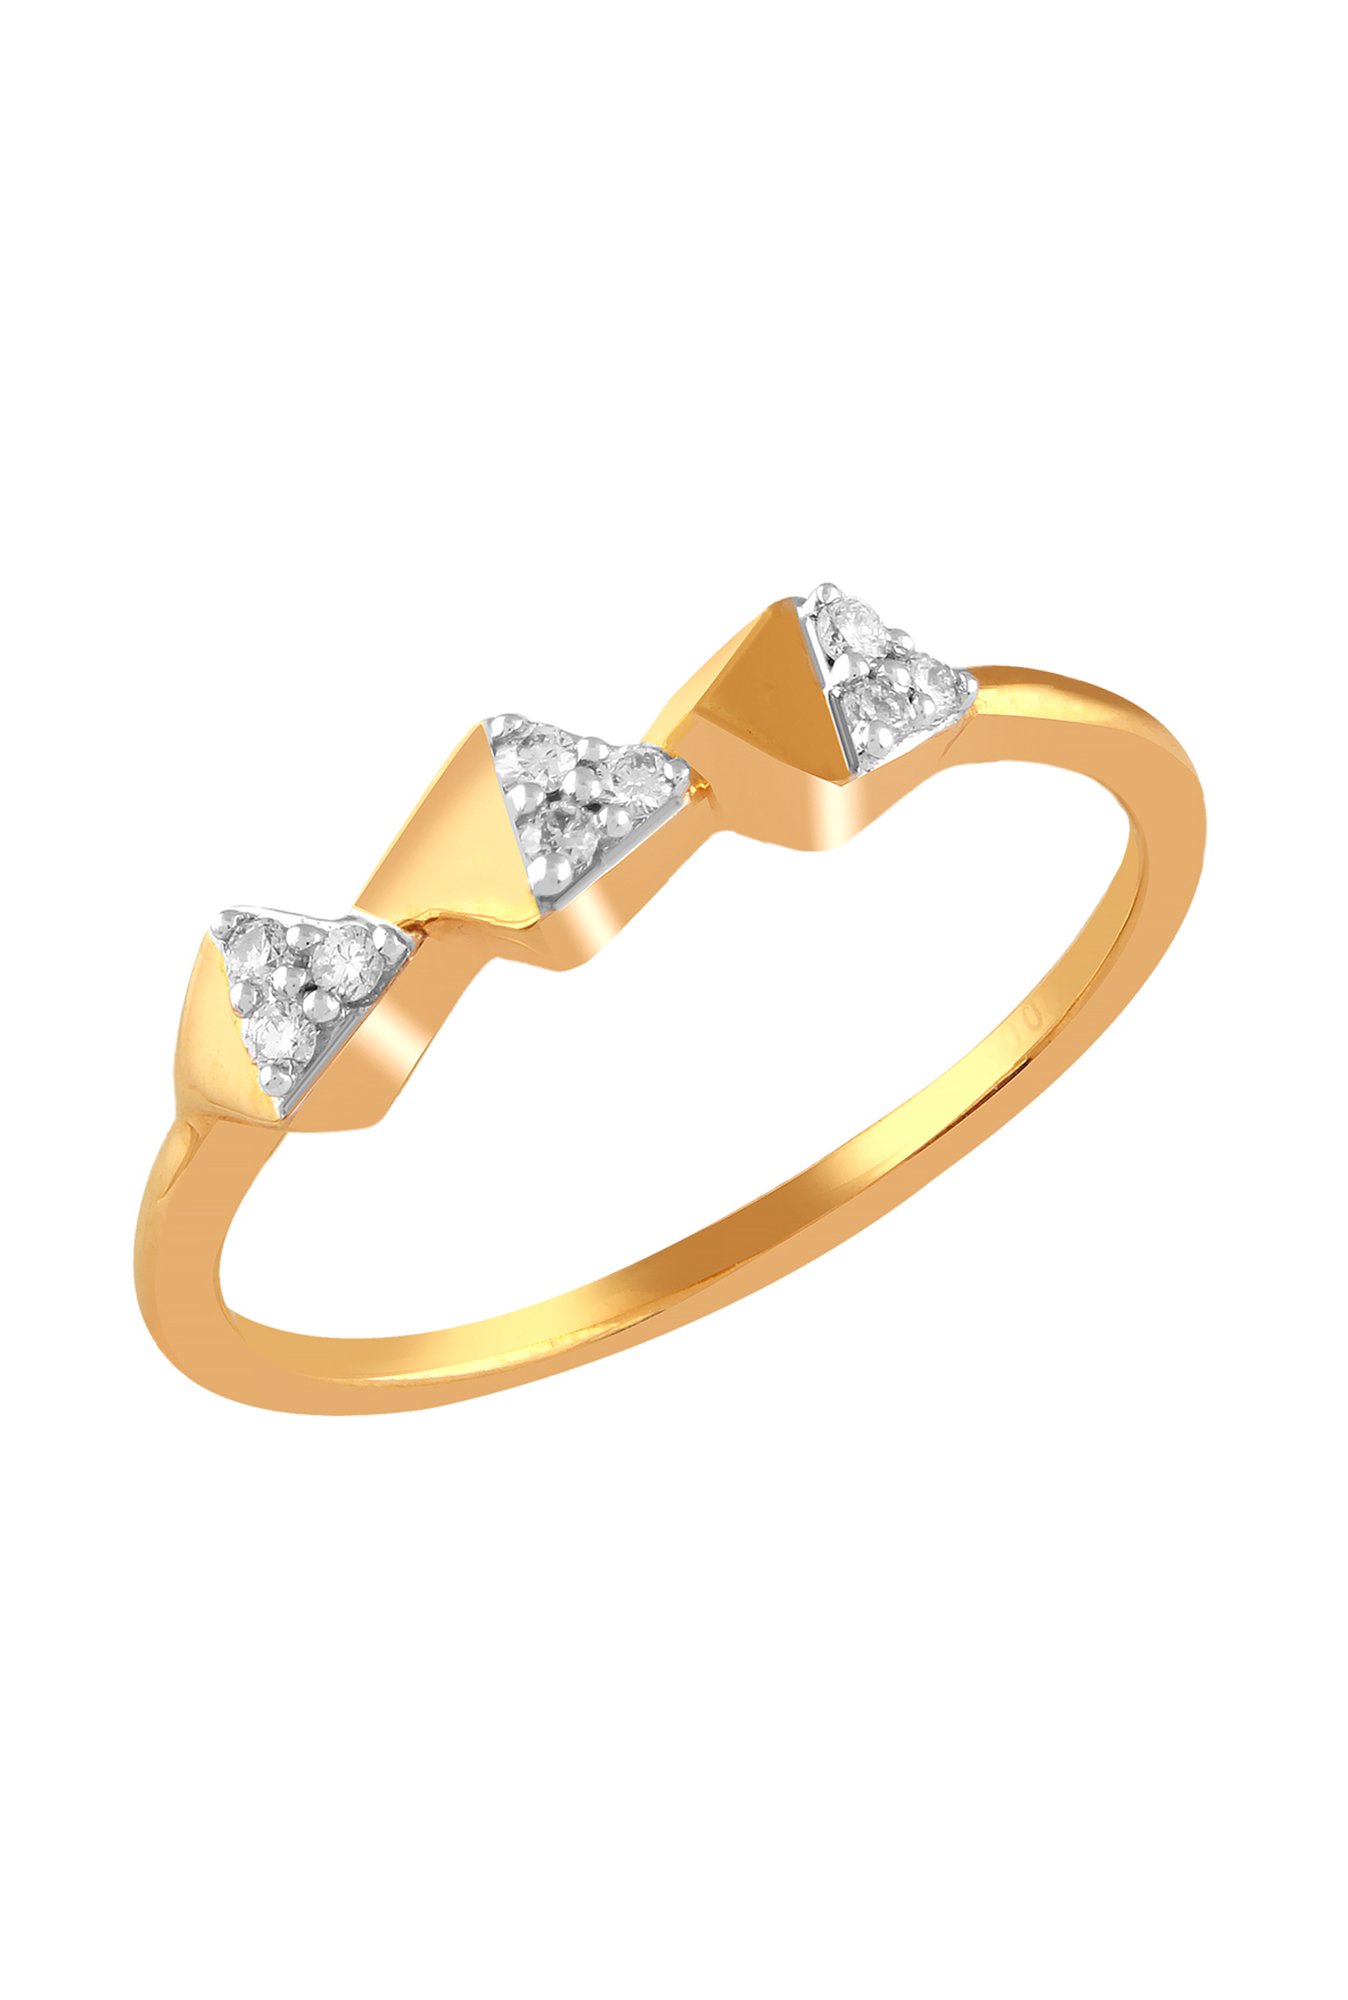 The Original 18 kt Gold \u0026 Diamond Ring 